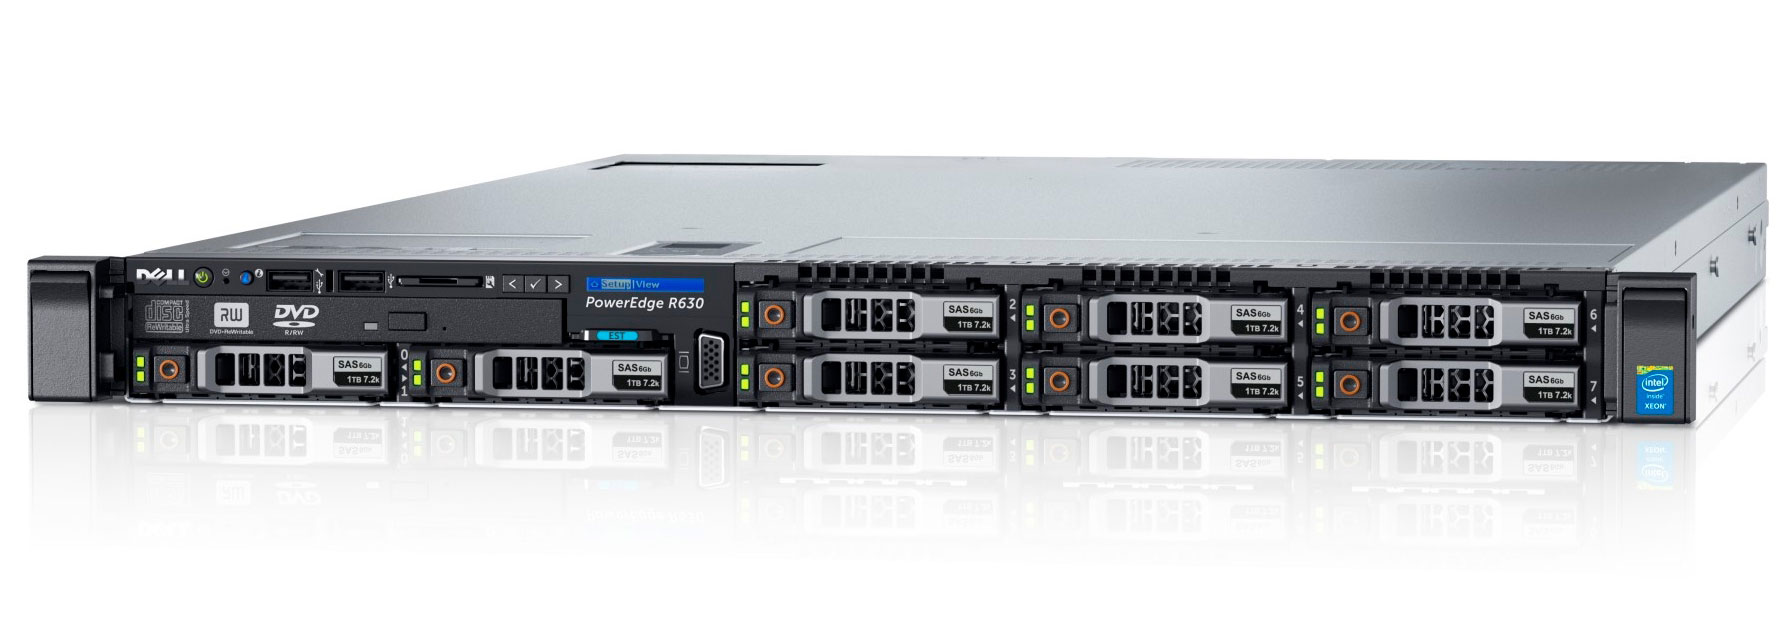 Подробное фото Сервер DELL PowerEdge R630 2x Xeon E5-2670v3 192Gb 2133P DDR4 8x noHDD 2.5" SAS RAID Perc H730, 1024Mb, DVD, 2*PSU